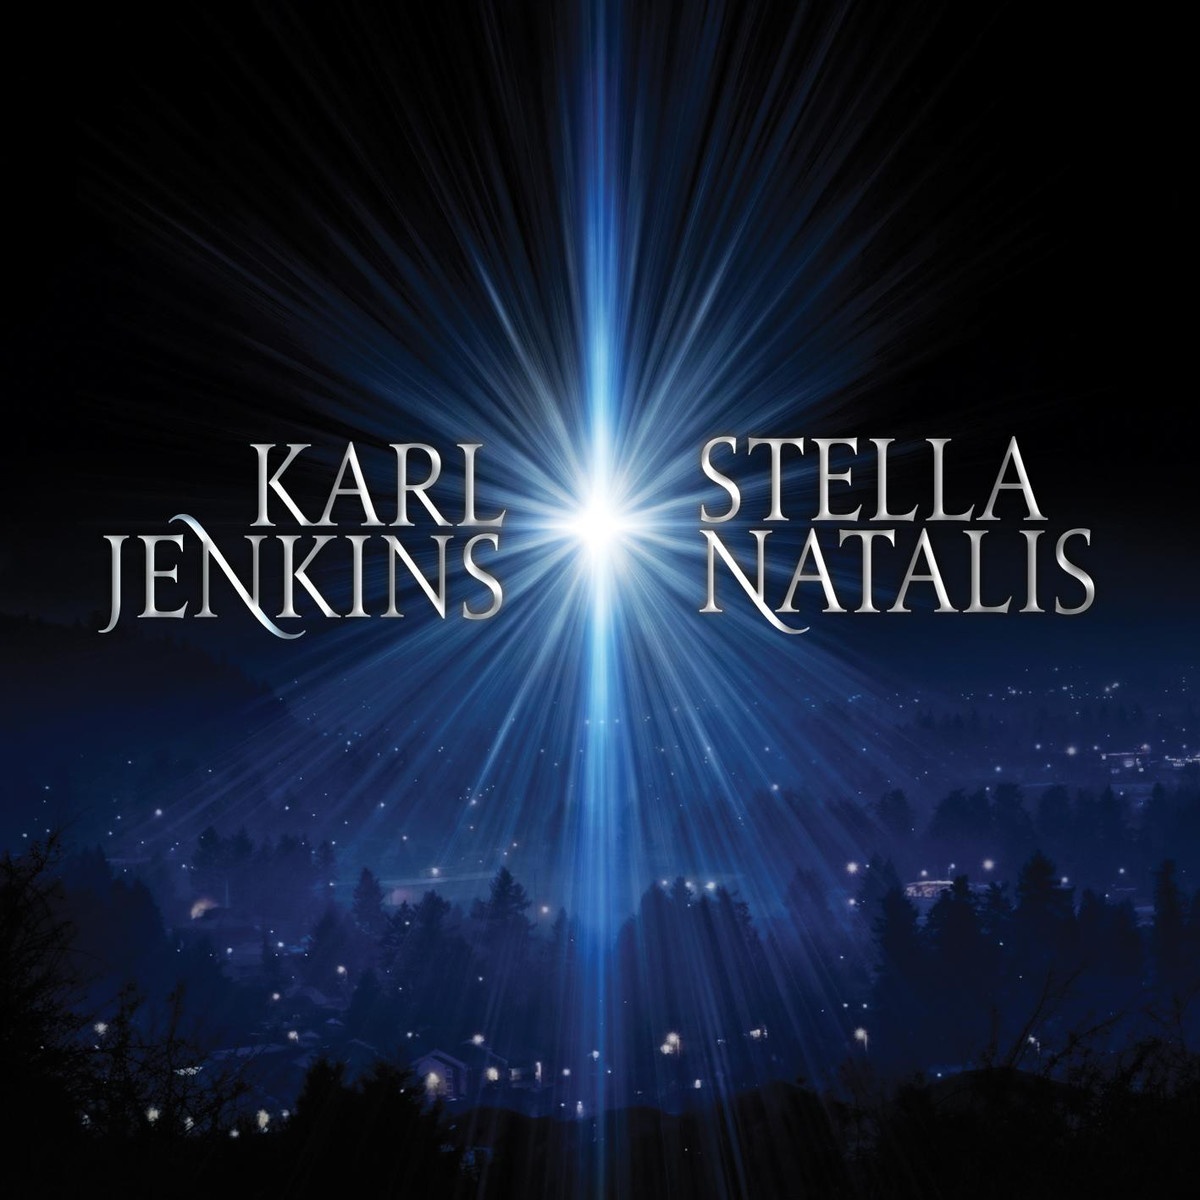 Stella natalis: Only heavenly music [In memoriam Christine Brown]